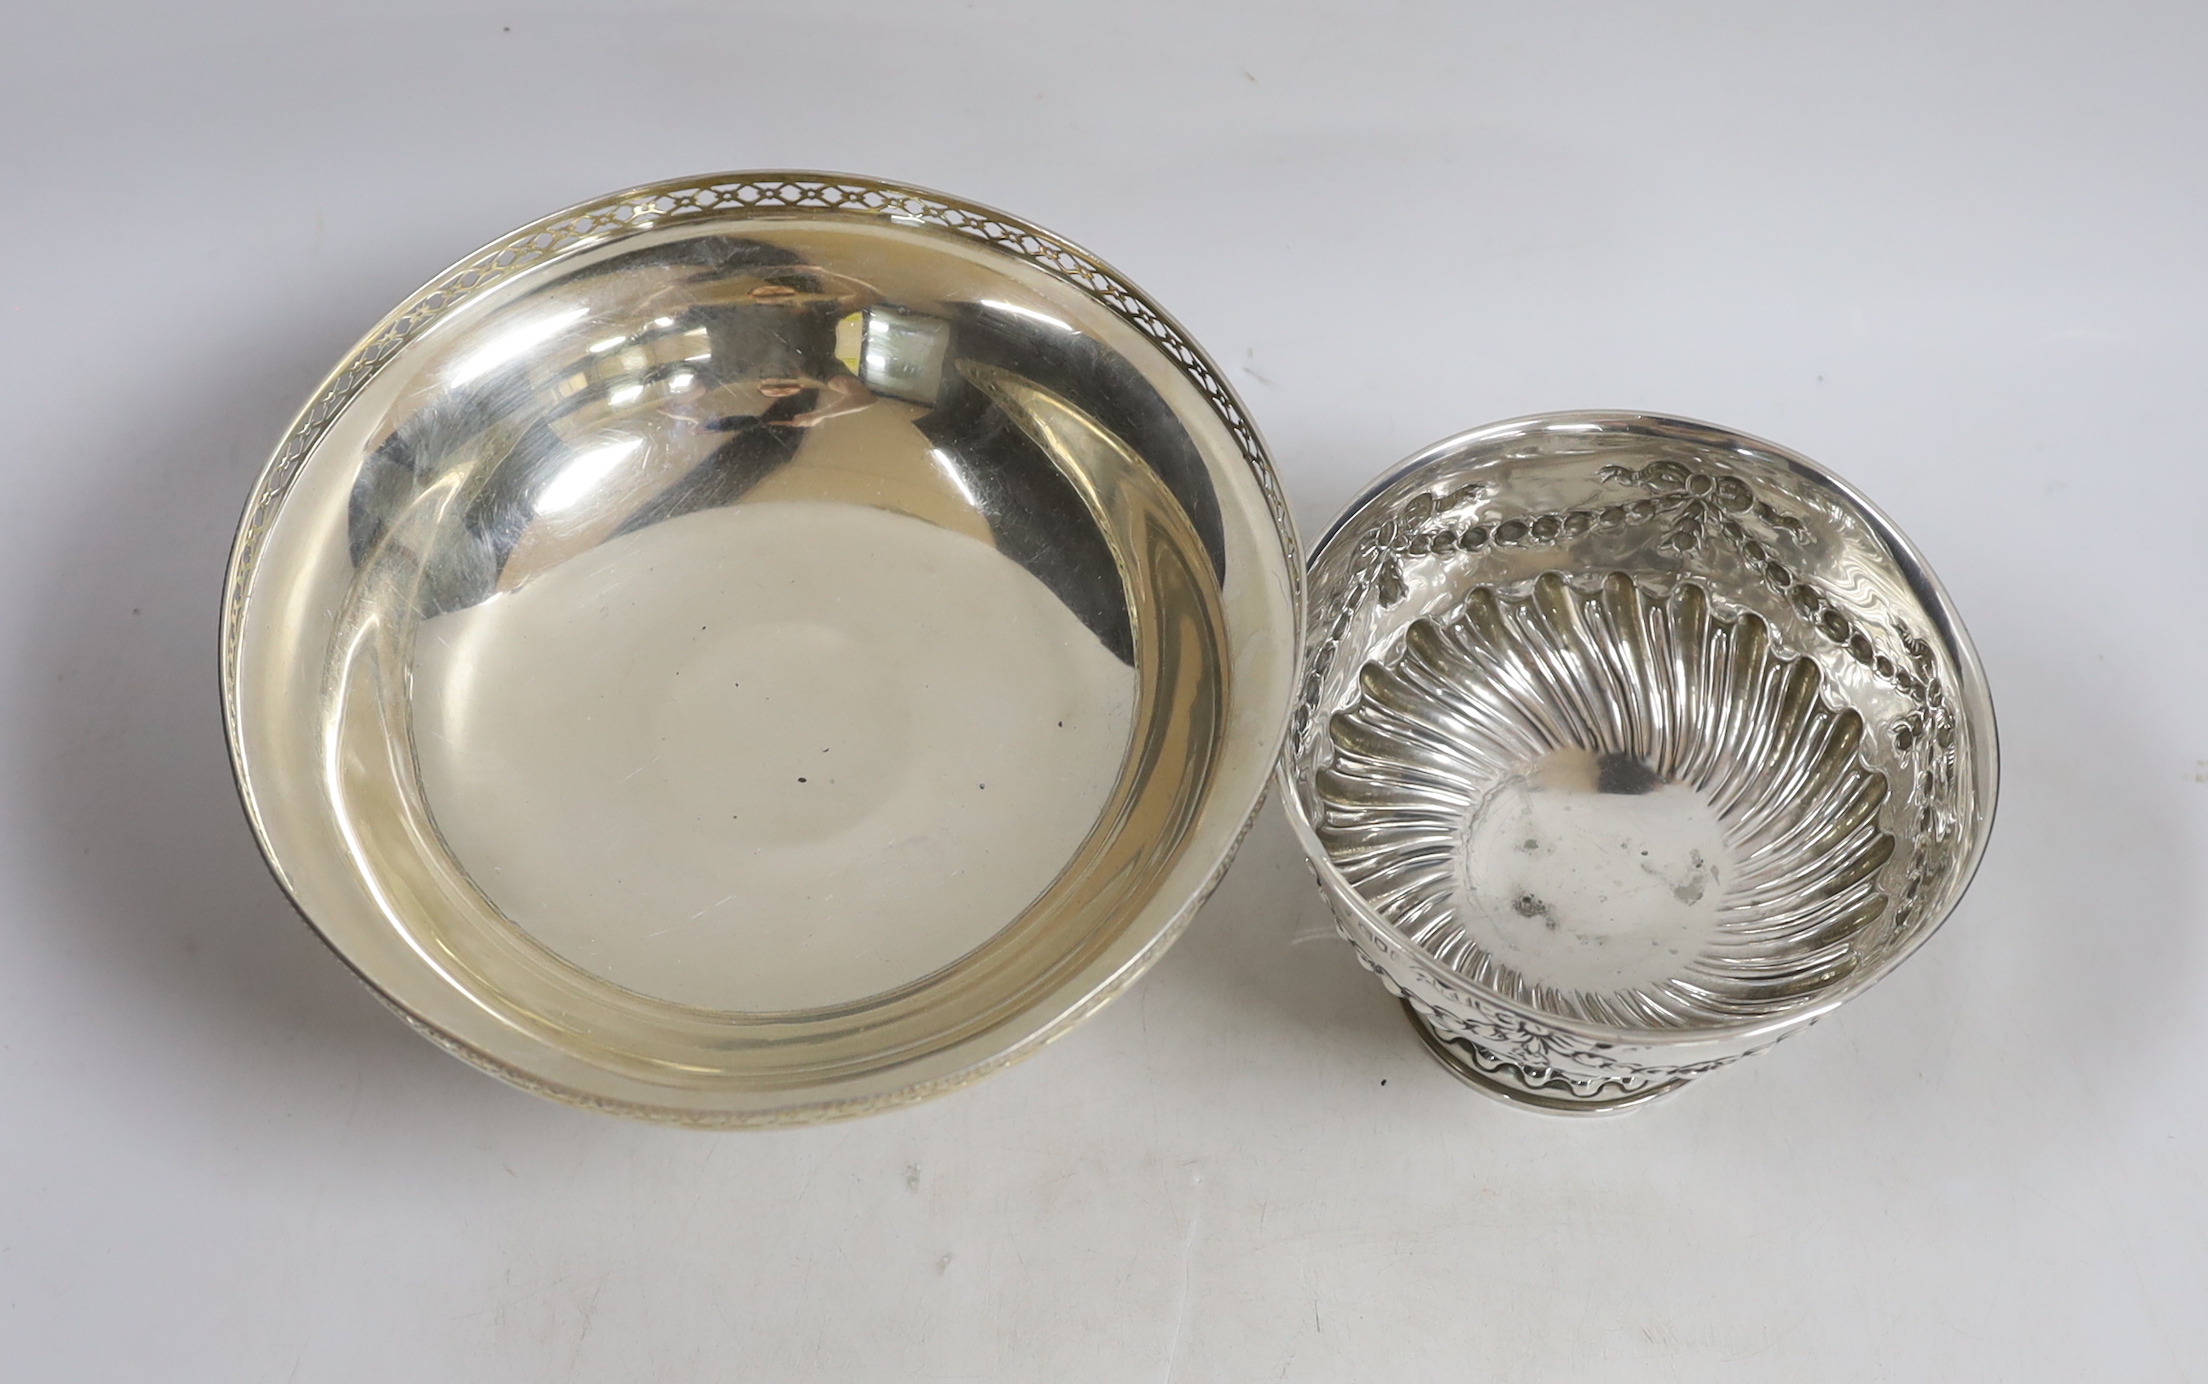 An Edwardian small repousse silver rose bowl, Charles Stuart Harris & Sons London, 1904, diameter 13.7cm and a later larger silver pedestal bowl, 15.3oz.